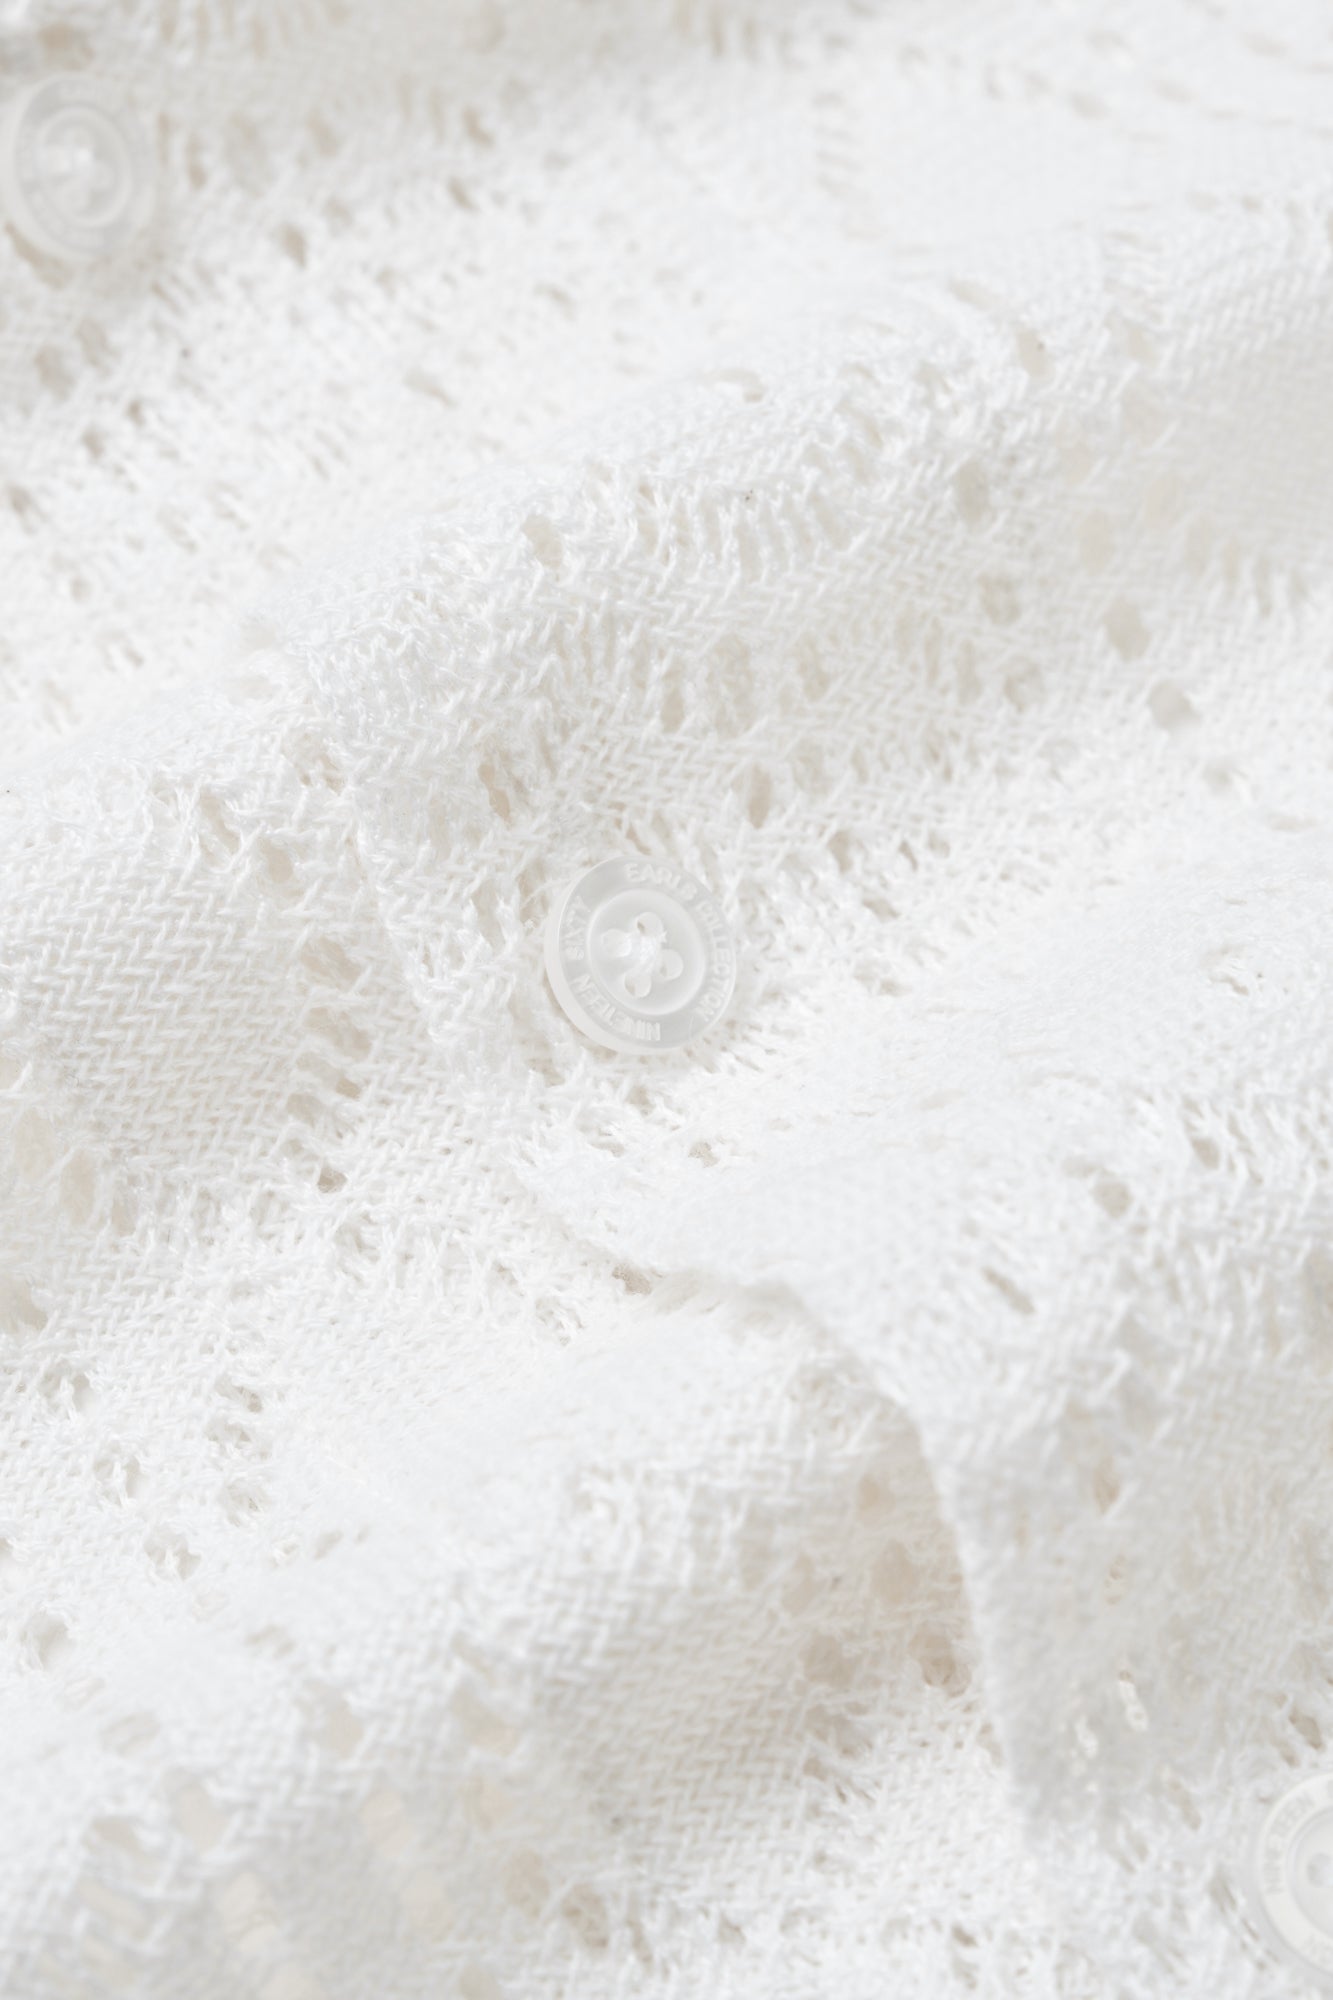 Crochet Shirt - White